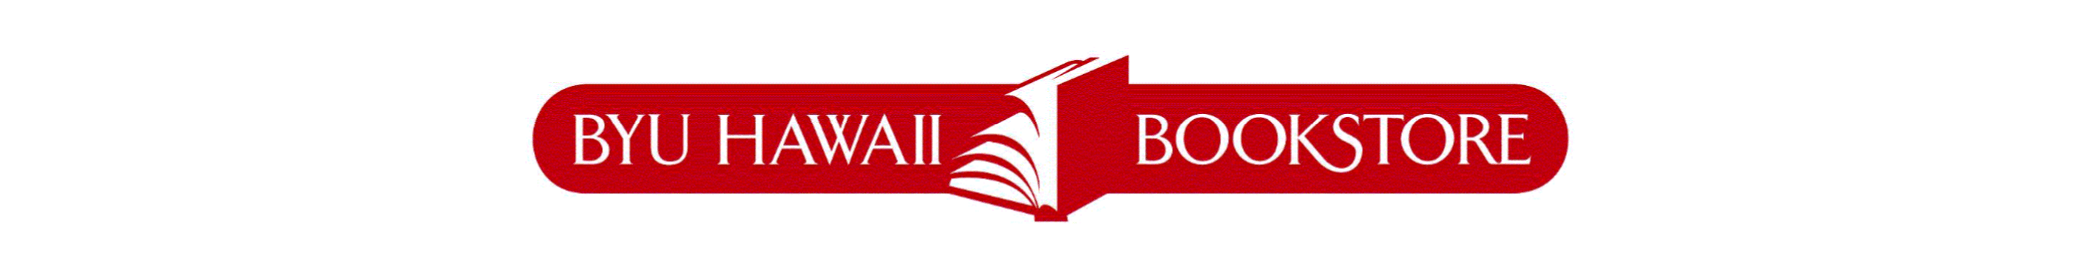 BYU-Hawaii Logo - BYU Hawaii Bookstore